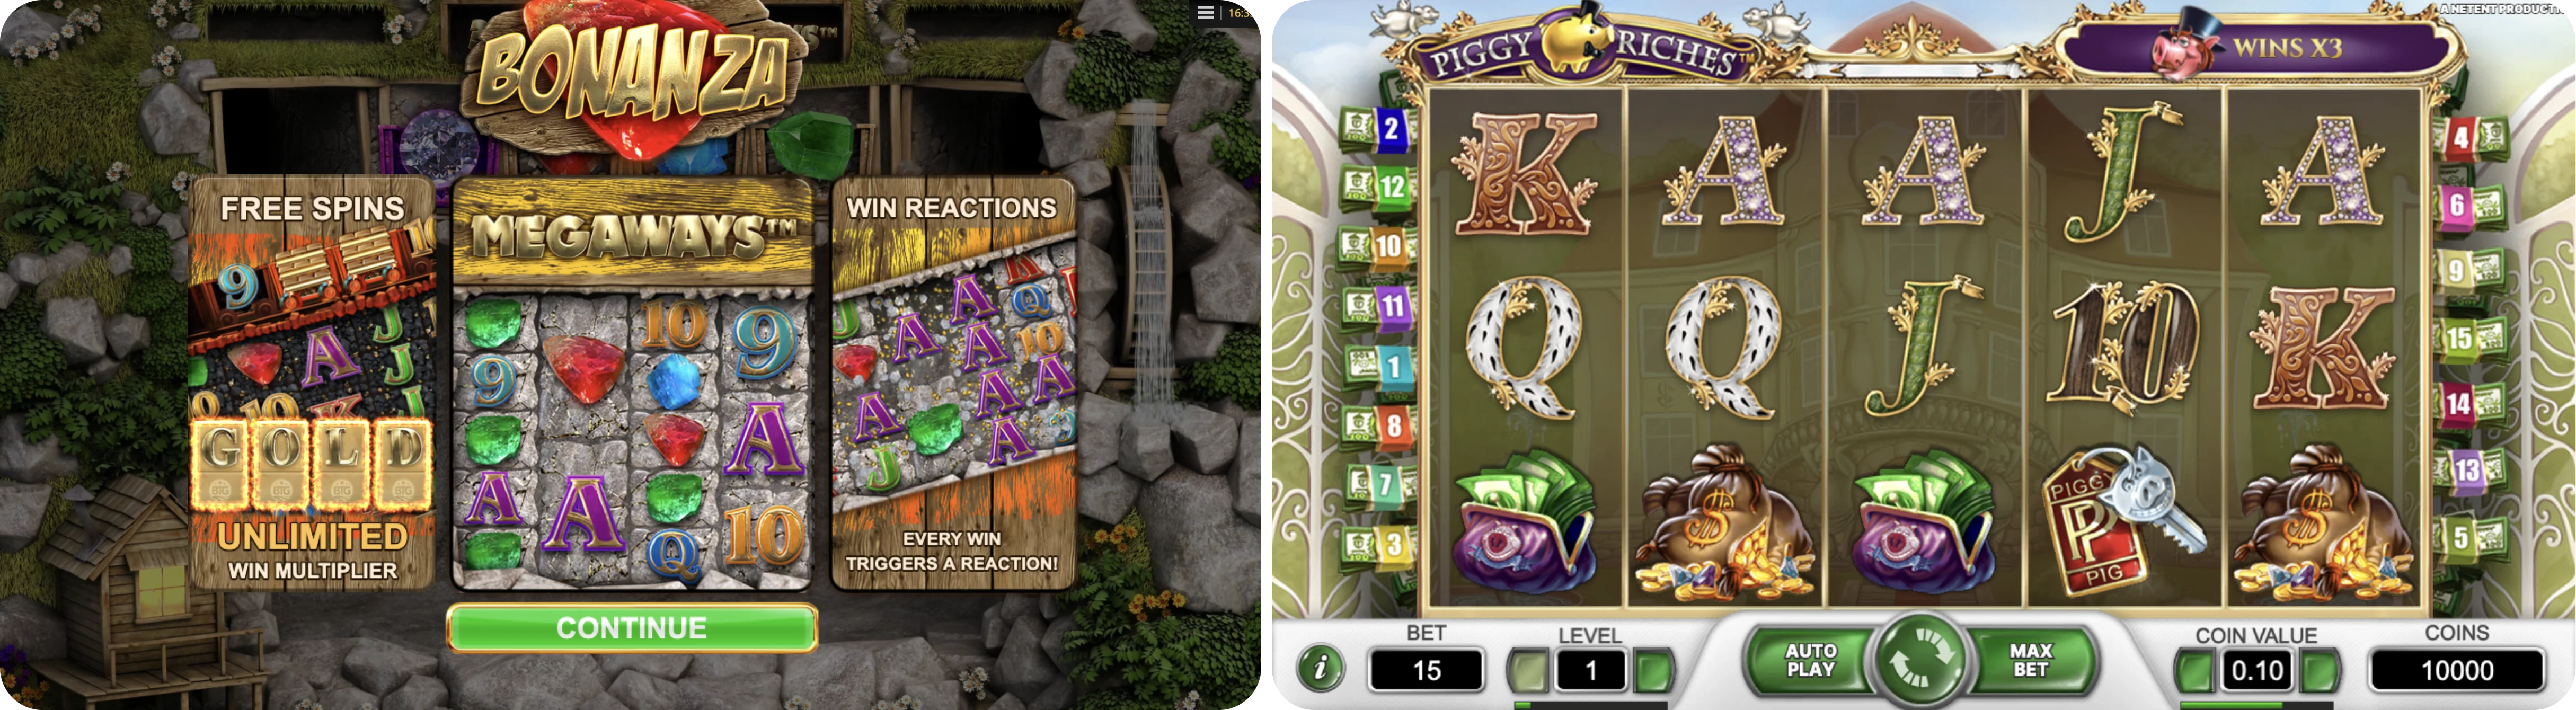 Gameplay Images of two BetMGM Slots Eligible For No Deposit Bonus